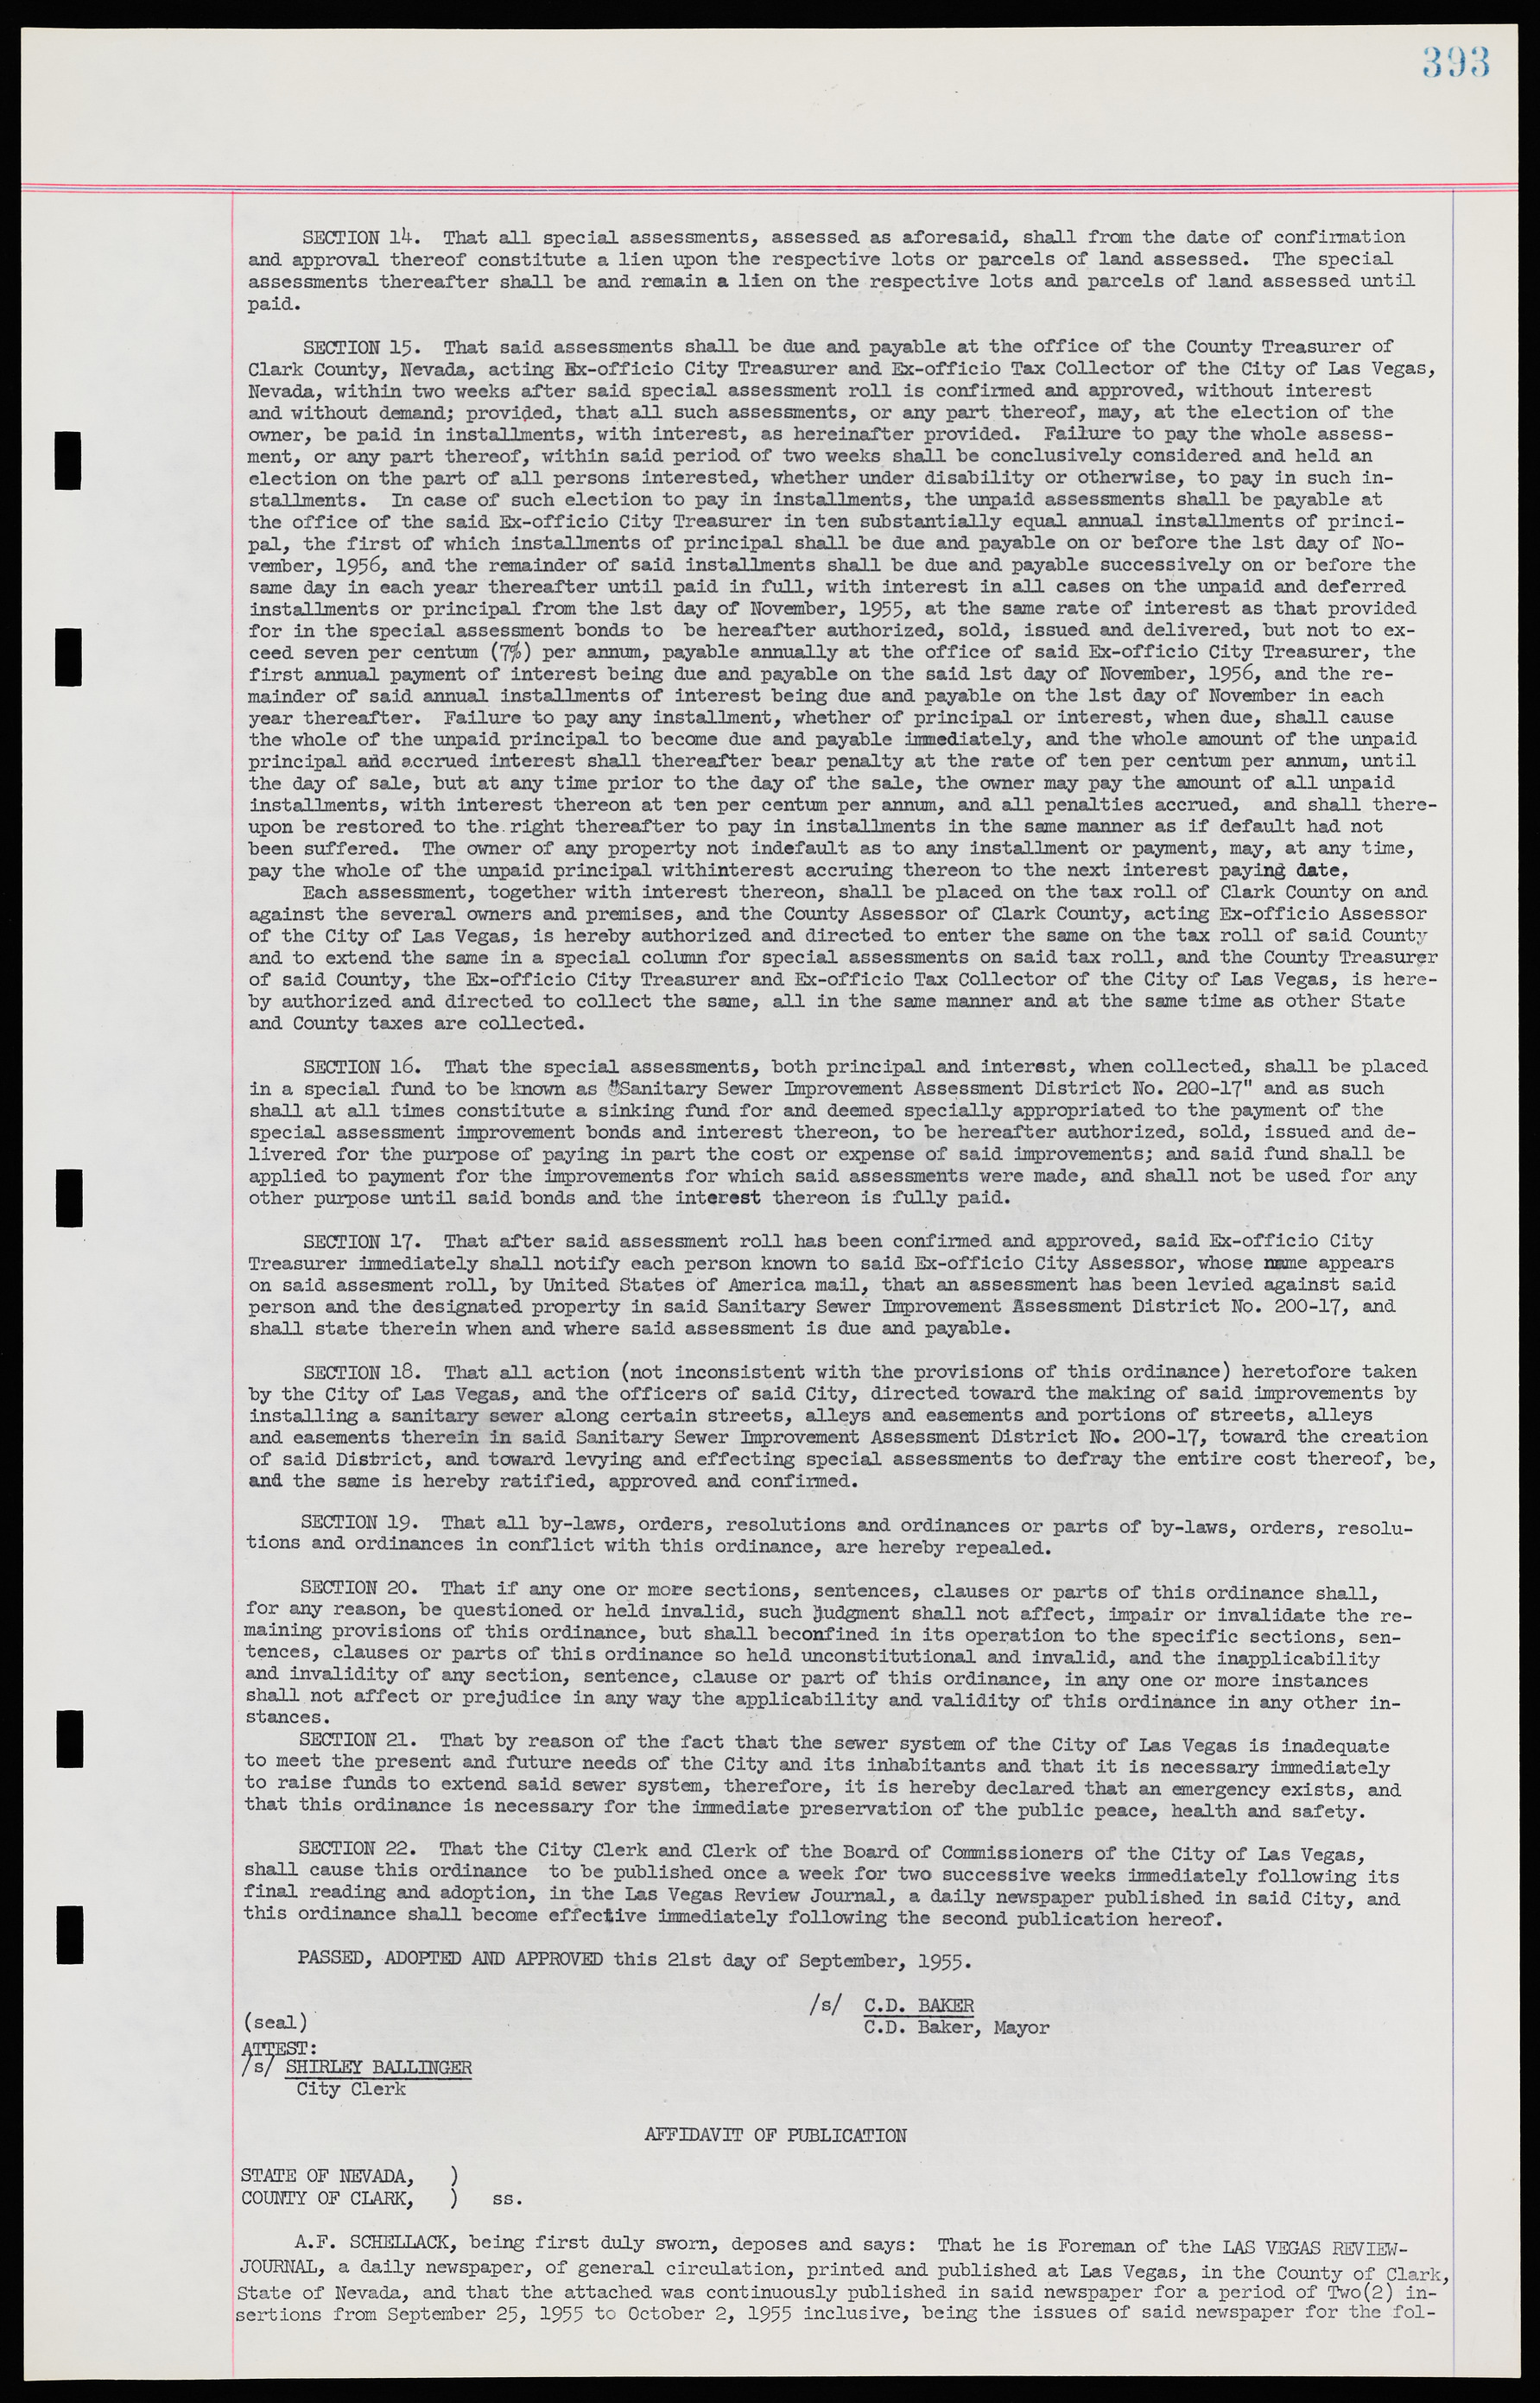 Las Vegas City Ordinances, November 13, 1950 to August 6, 1958, lvc000015-401